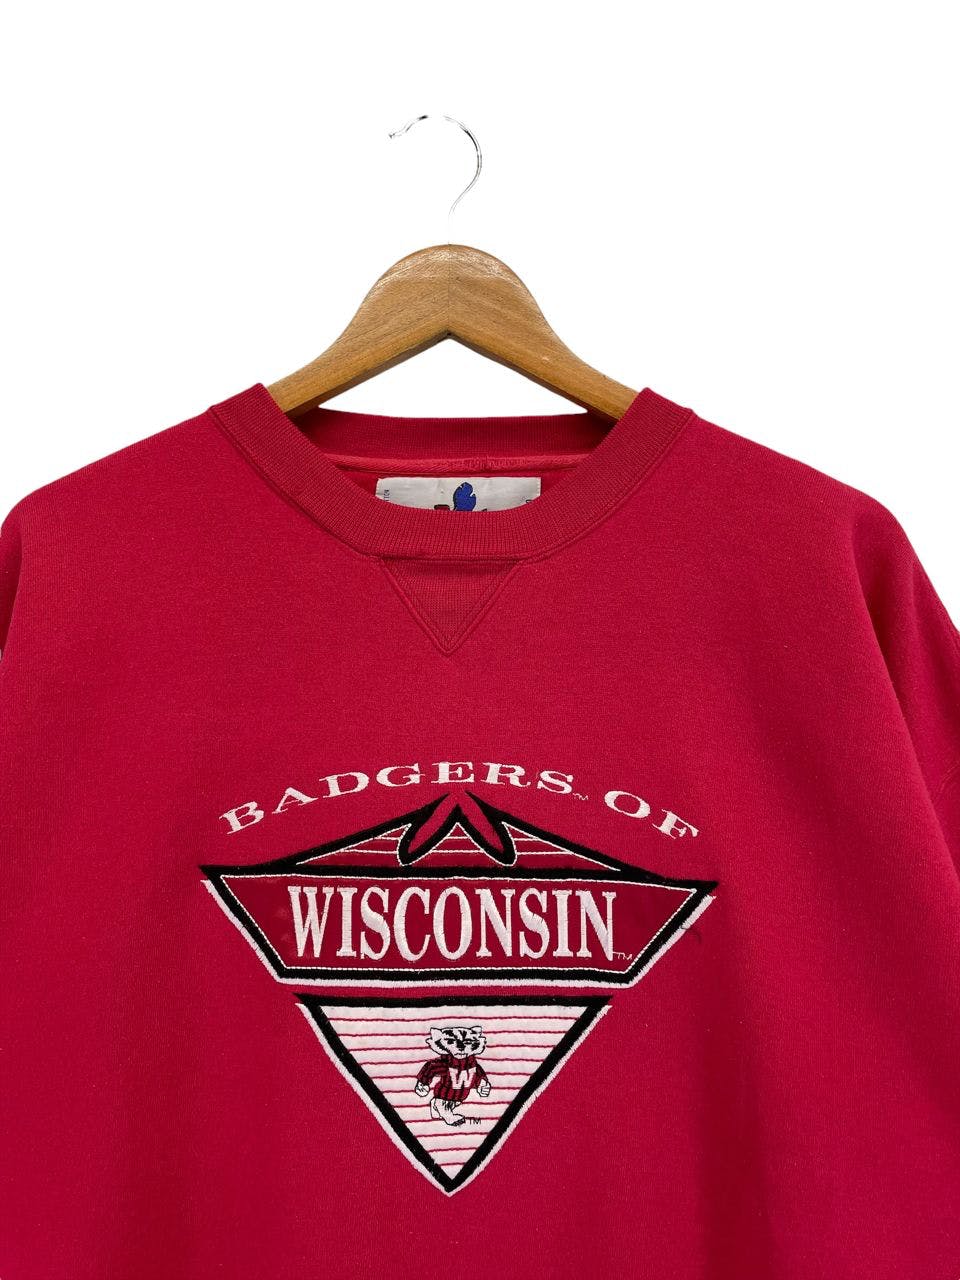 Sports Specialties - Vintage Badgers of Wisconsin Big Logo Crewneck Sweatshirt - 4